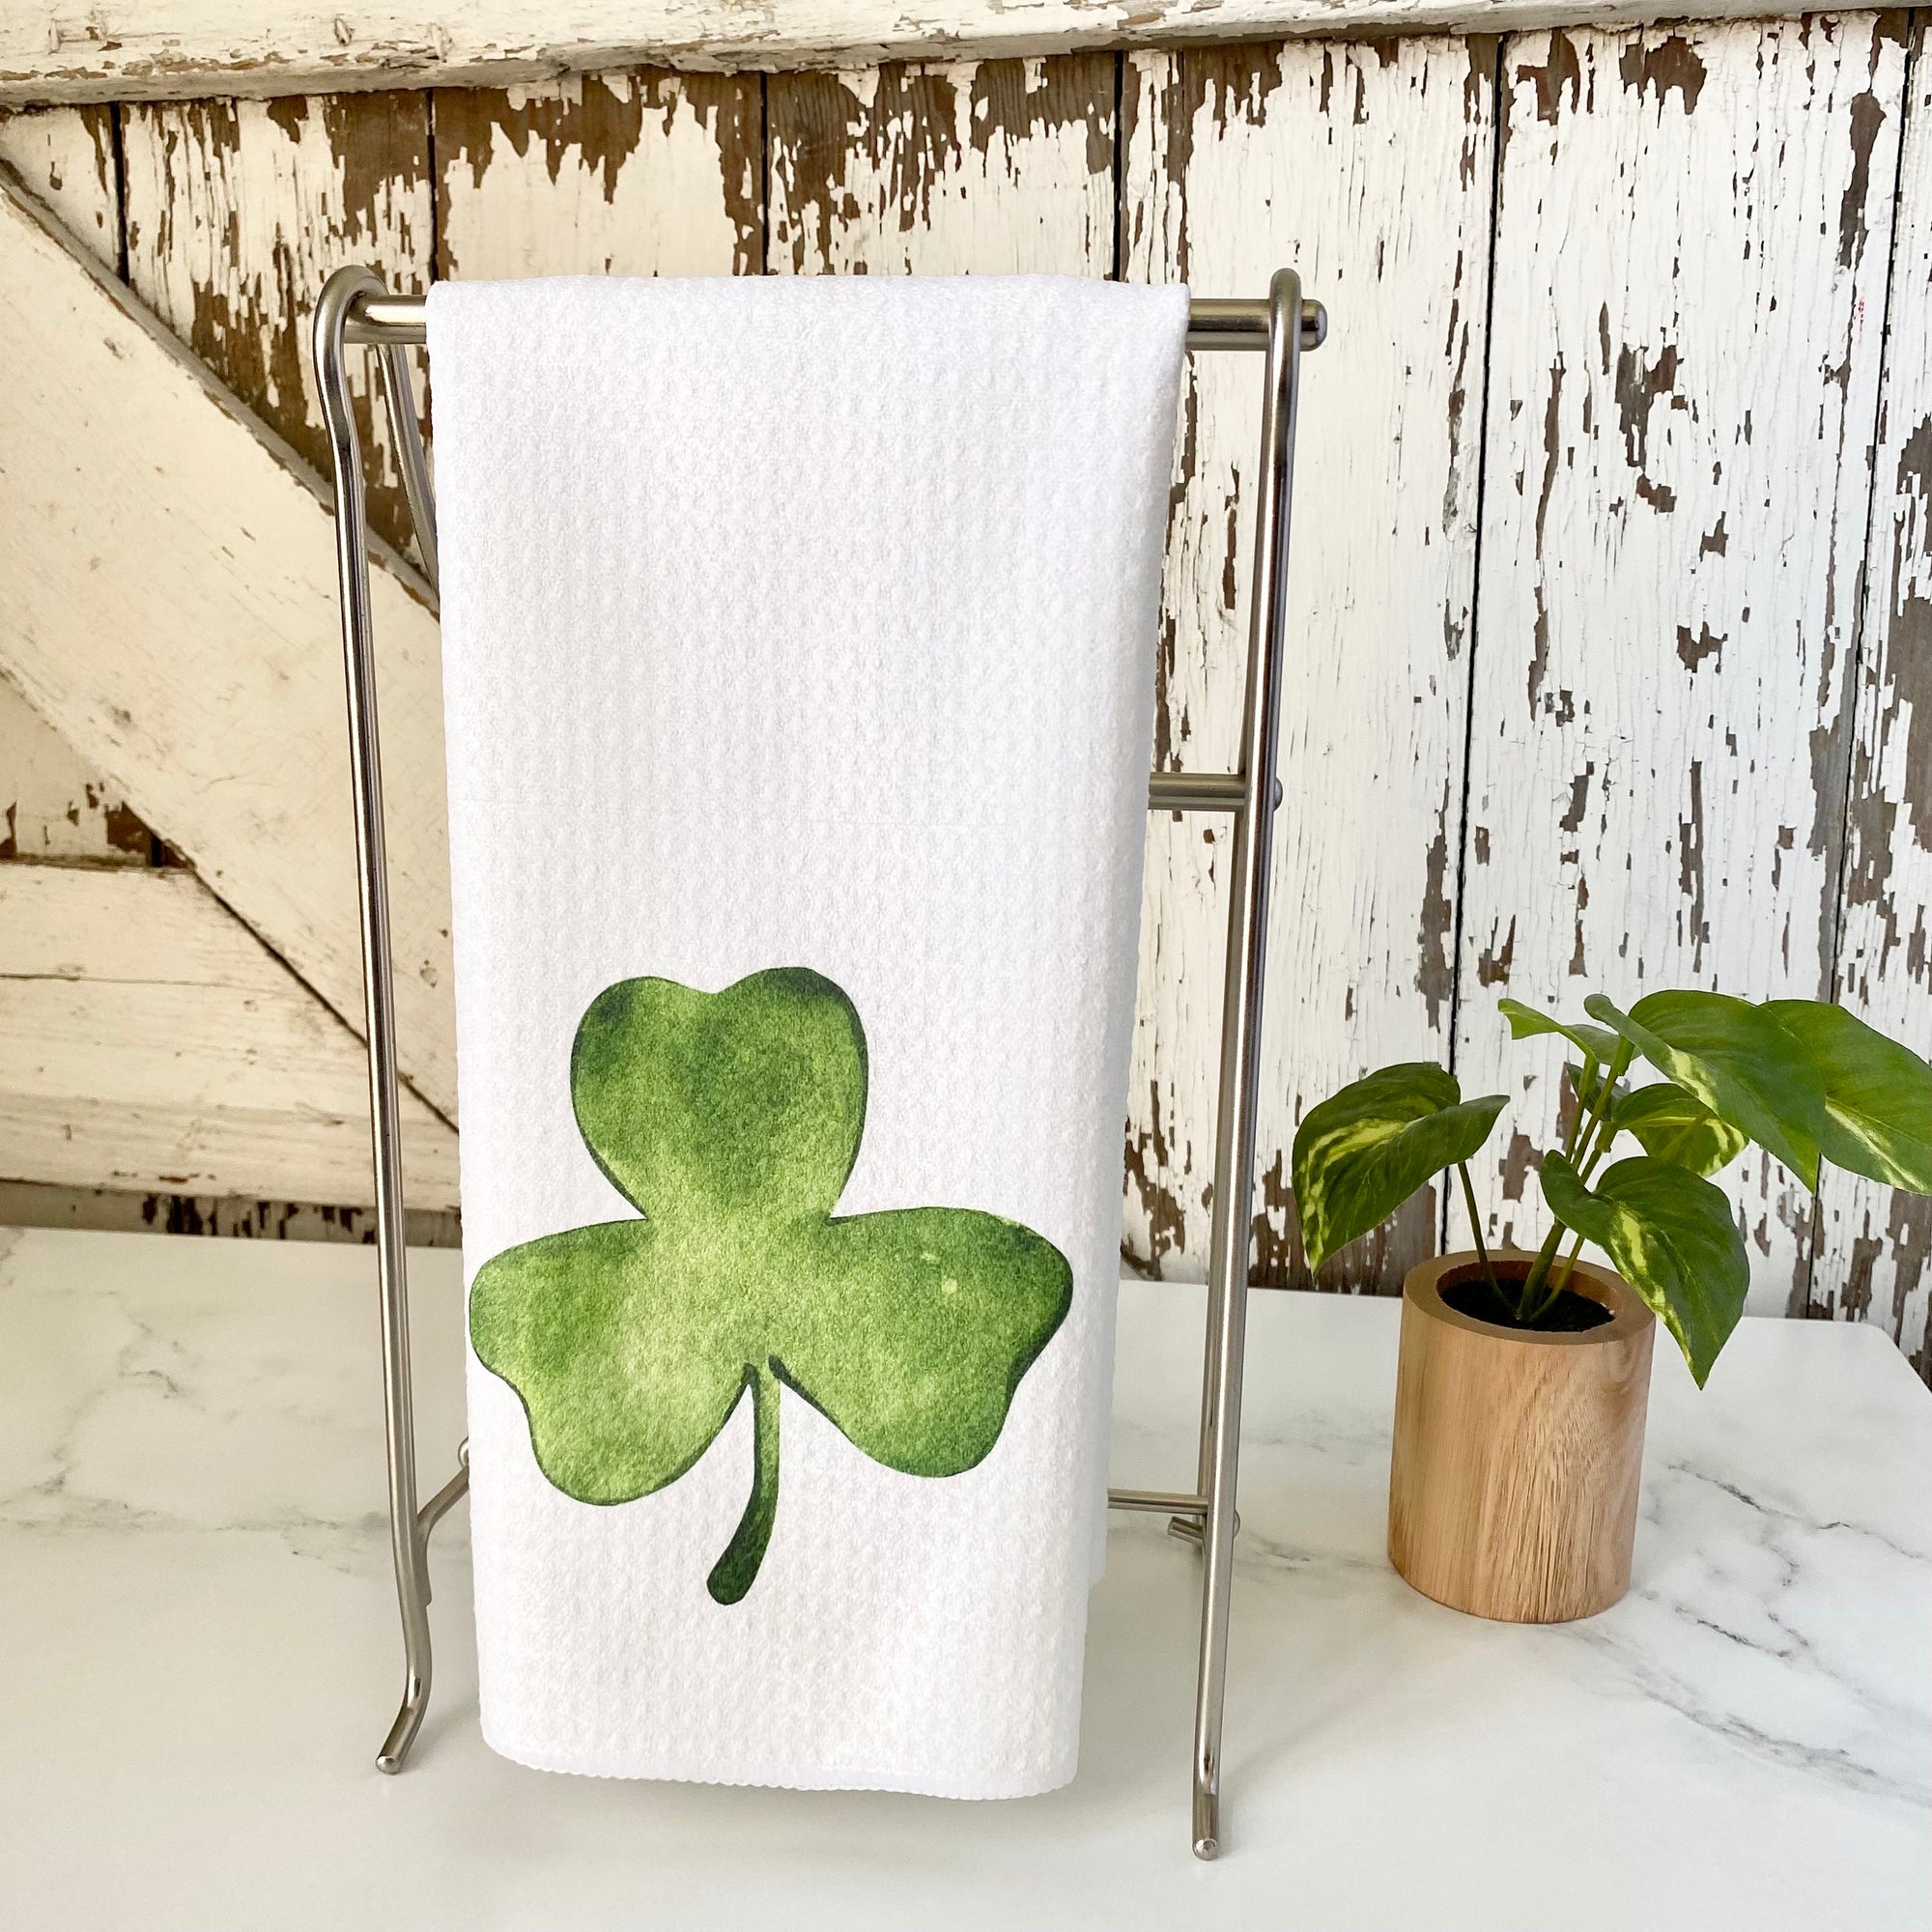 St. Patrick's Day Brewing Company Dish Towel- Waffle Woven Microfiber Saint Paddys Day Tea Towel